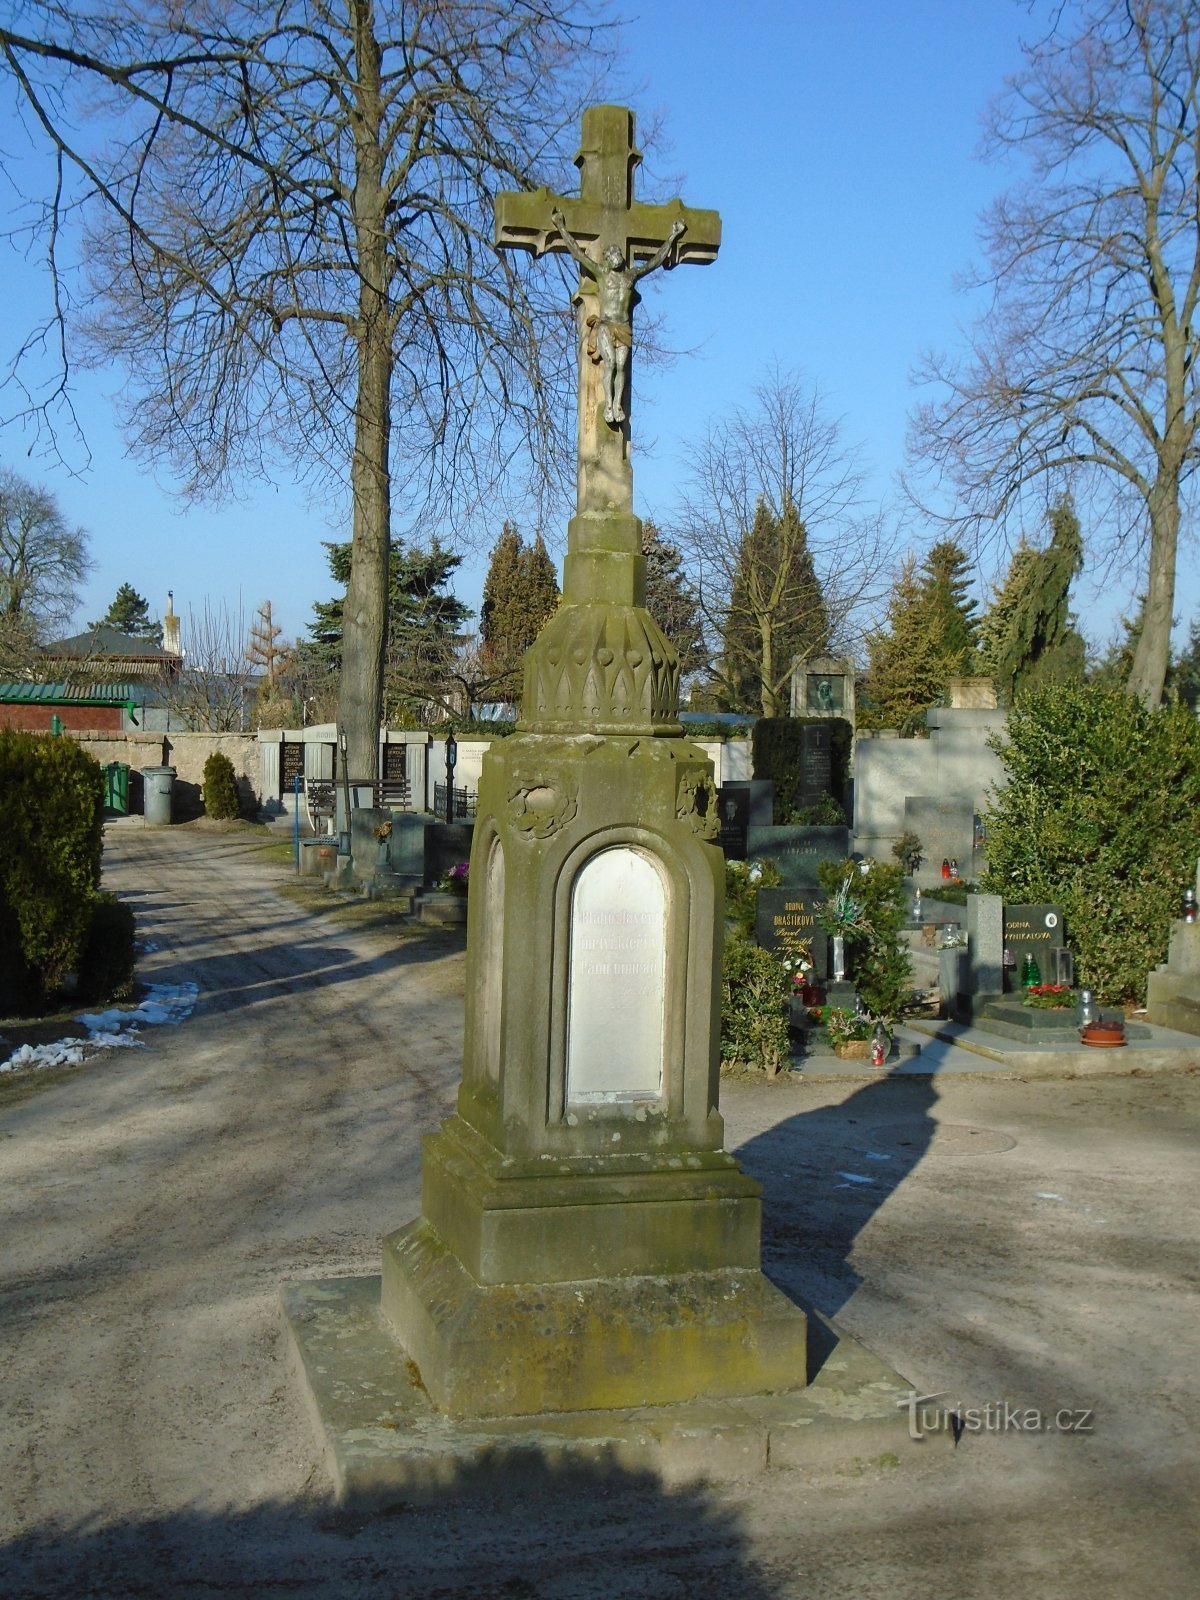 Cruz do cemitério em Pouchov (Hradec Králové, 22.2.2018/XNUMX/XNUMX)